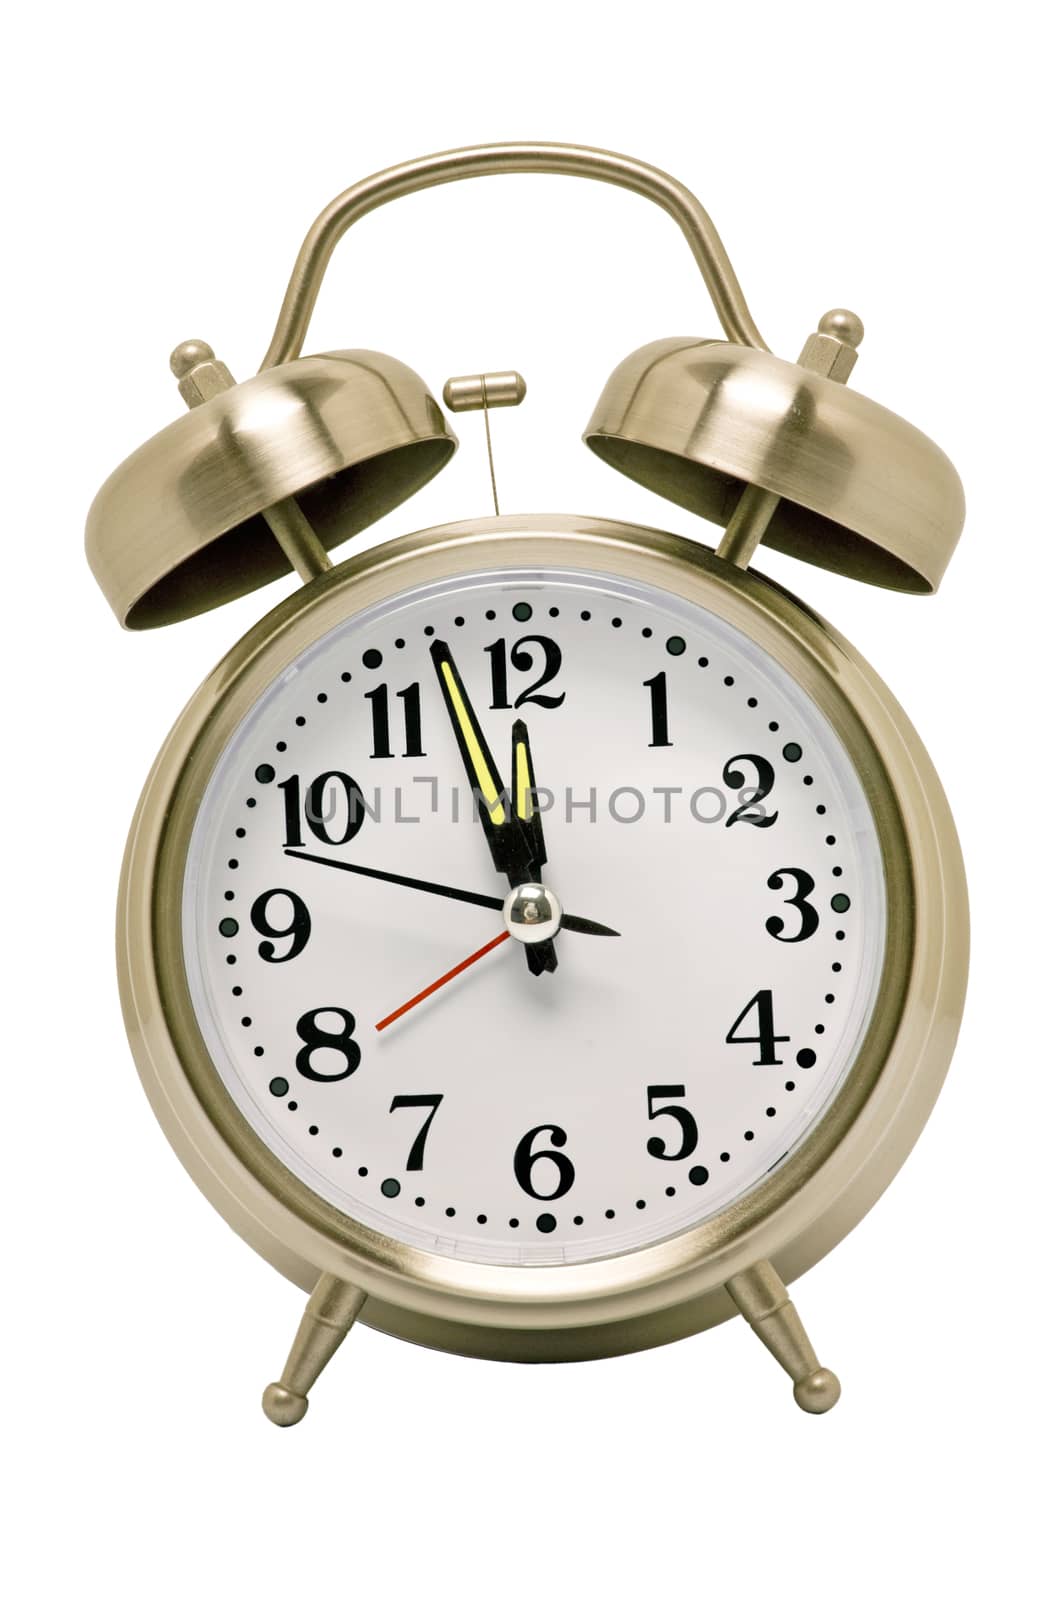 Vintage Alarm Clock by stockbuster1